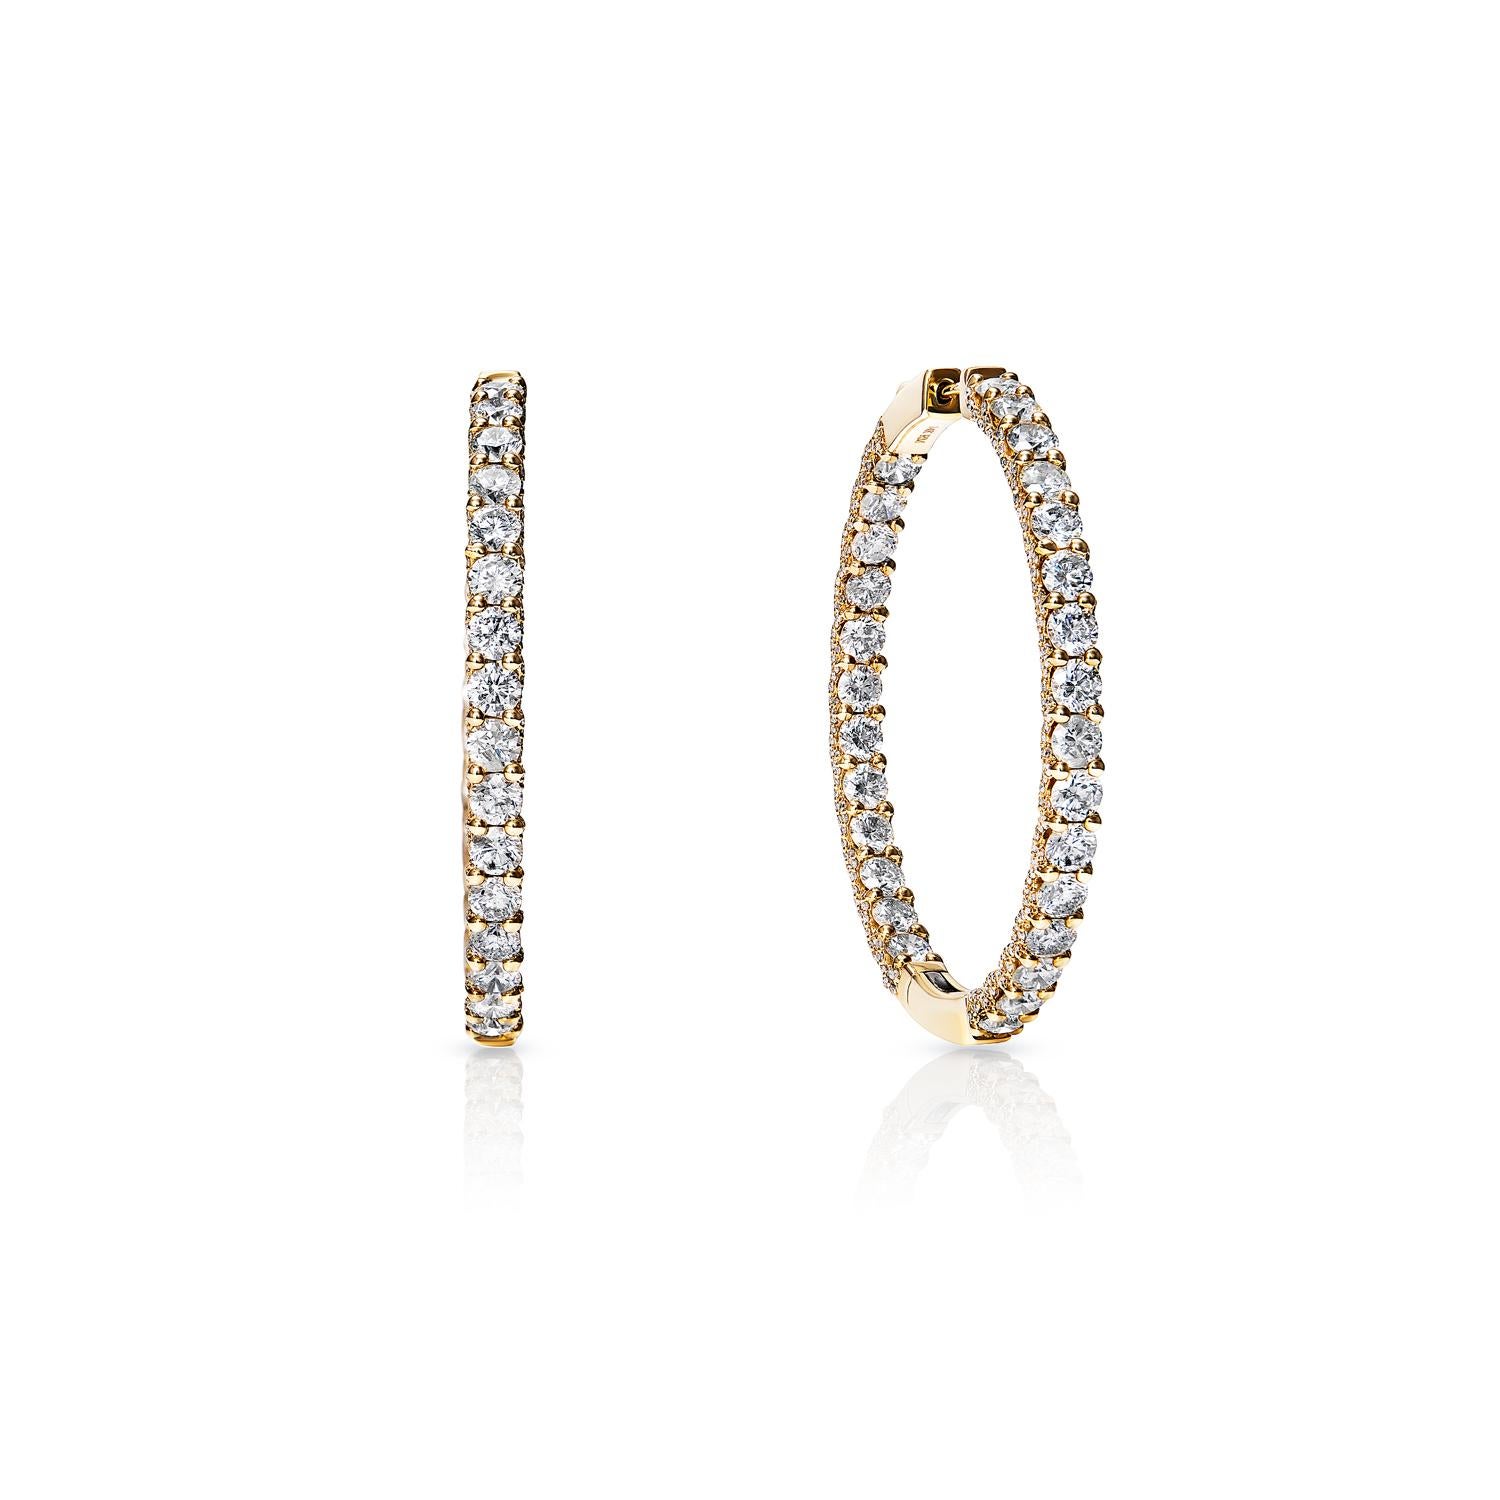 Diamond Hoop Earrings For Ladies:

Carat Weight: 11.10 Carats
Style: Round Brilliant Cut
Metal: 14 Karat Yellow Gold
Style: Hoop Earrings